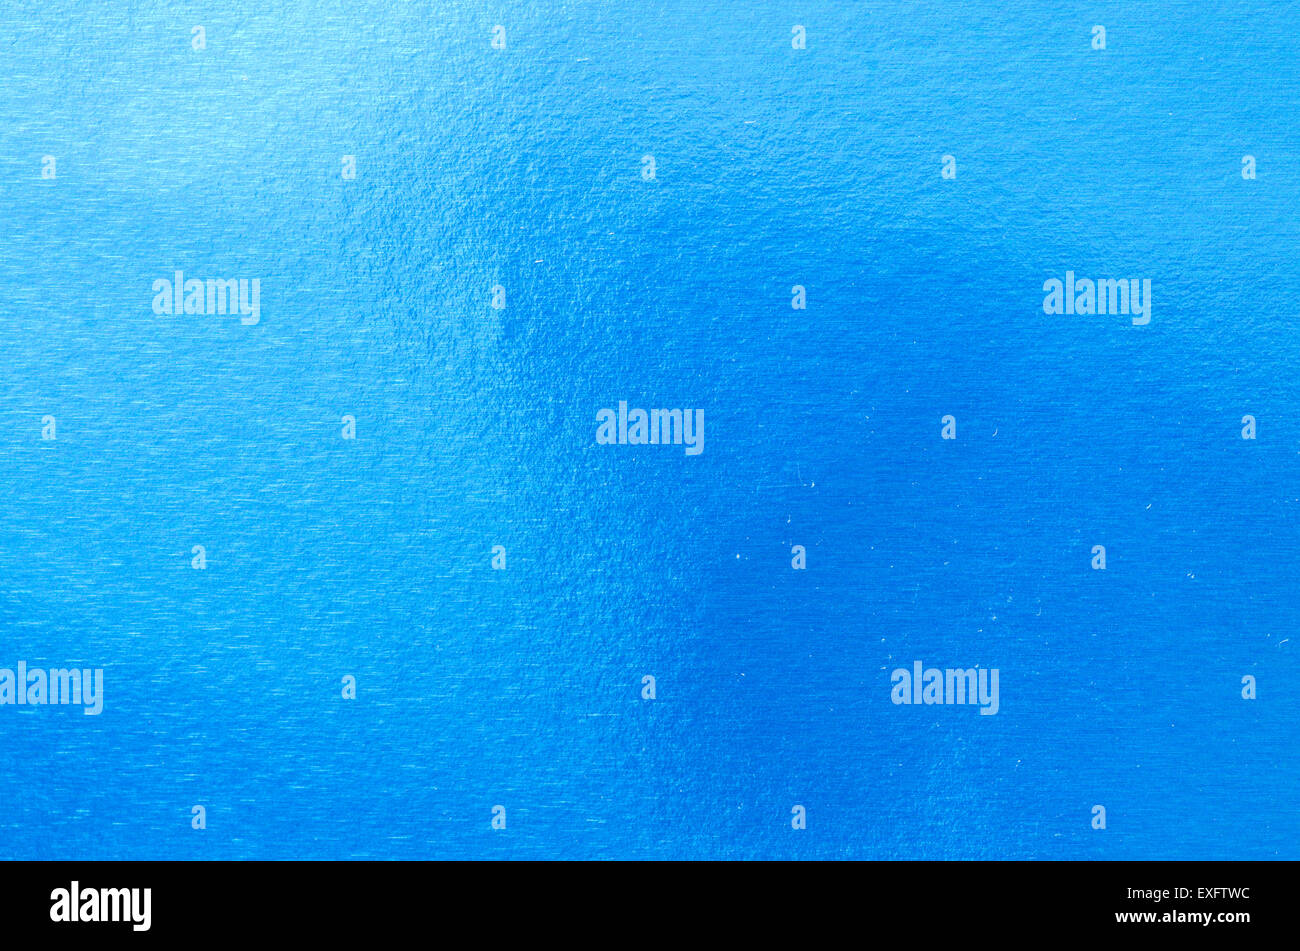 blue abstract metallic background texture Stock Photo